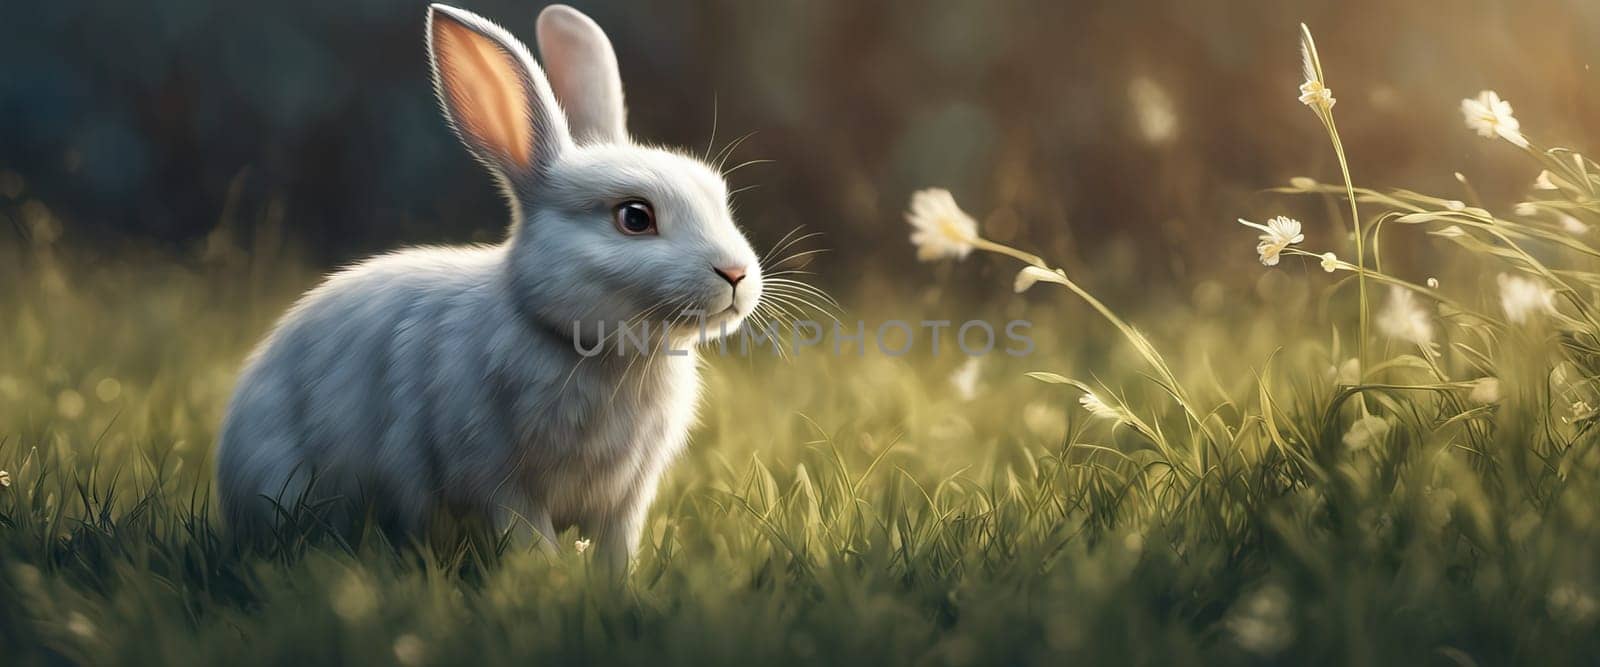 Cute little rabbit sitting in grass in the sunshine, banner for your design. by EkaterinaPereslavtseva